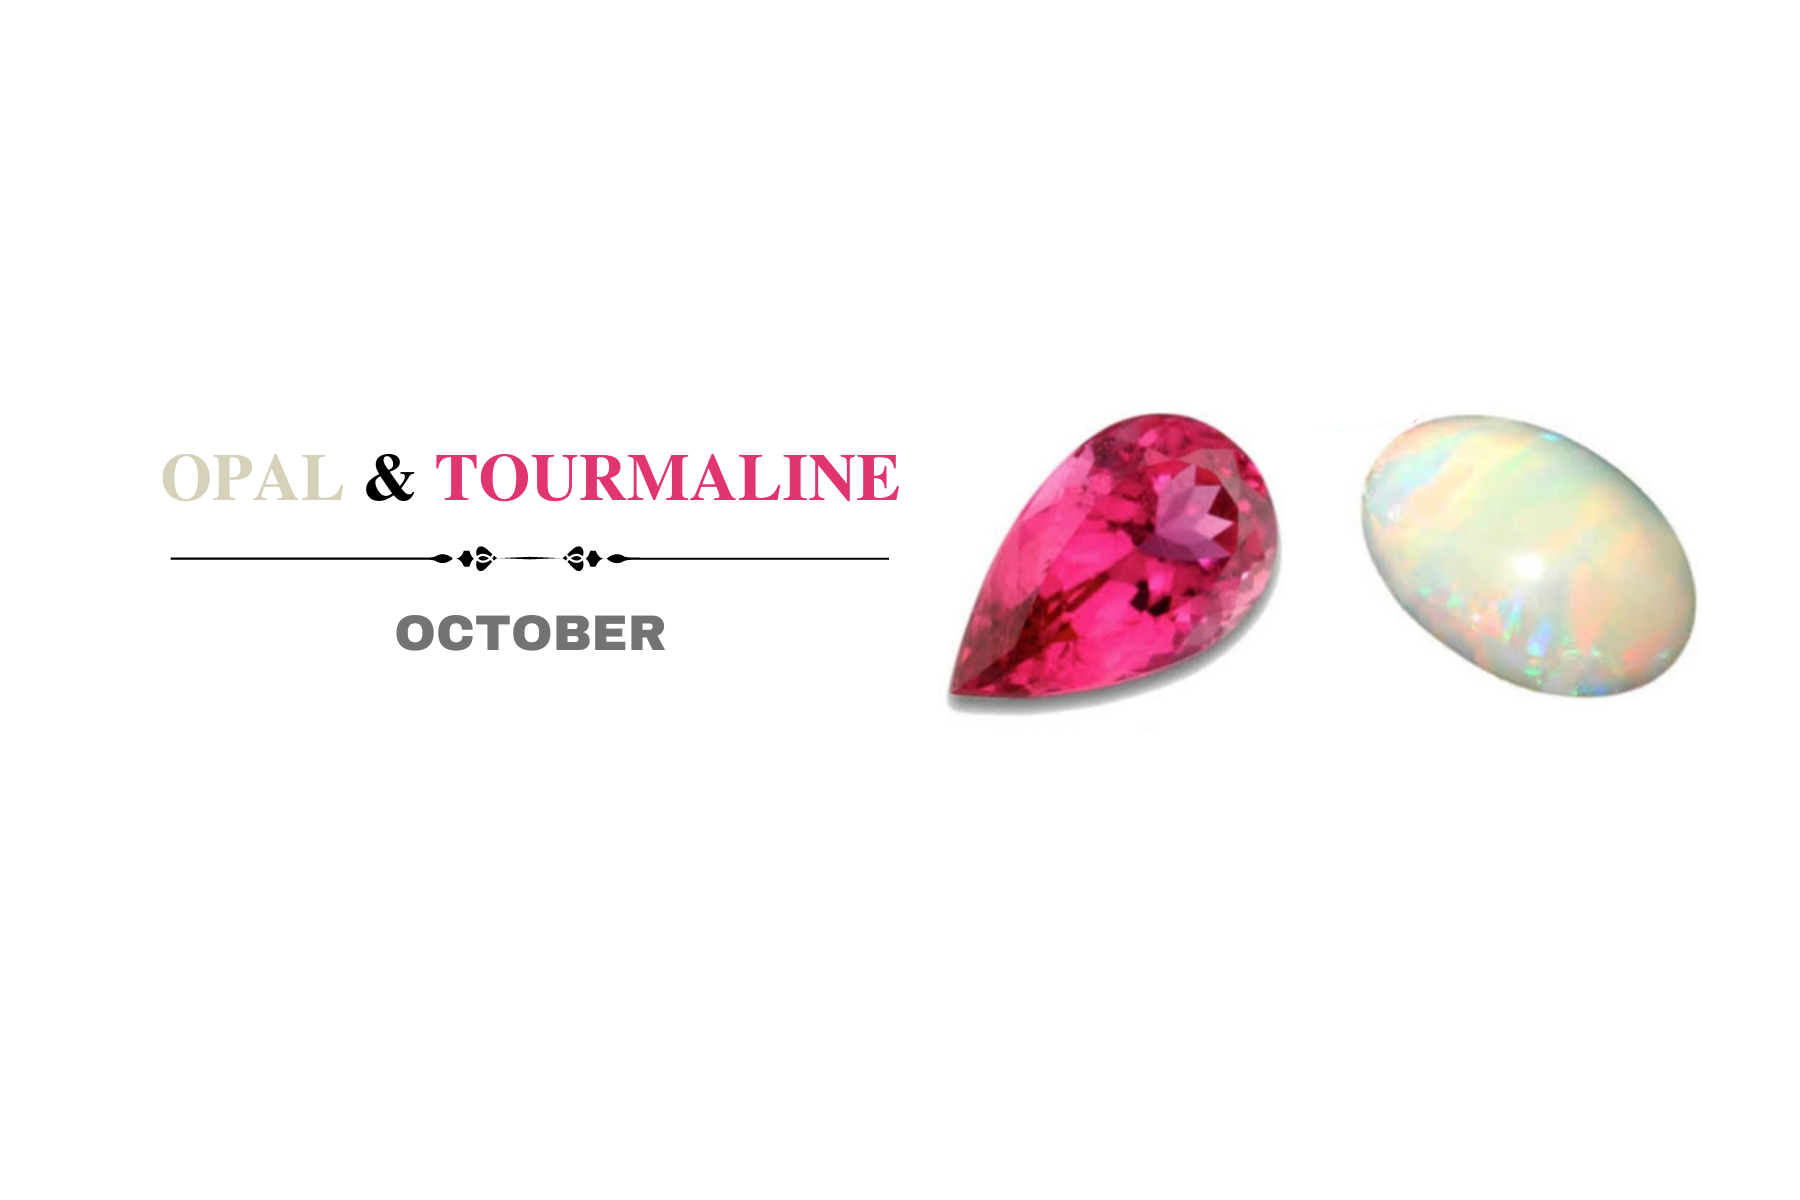 Opal and Tourmaline stone